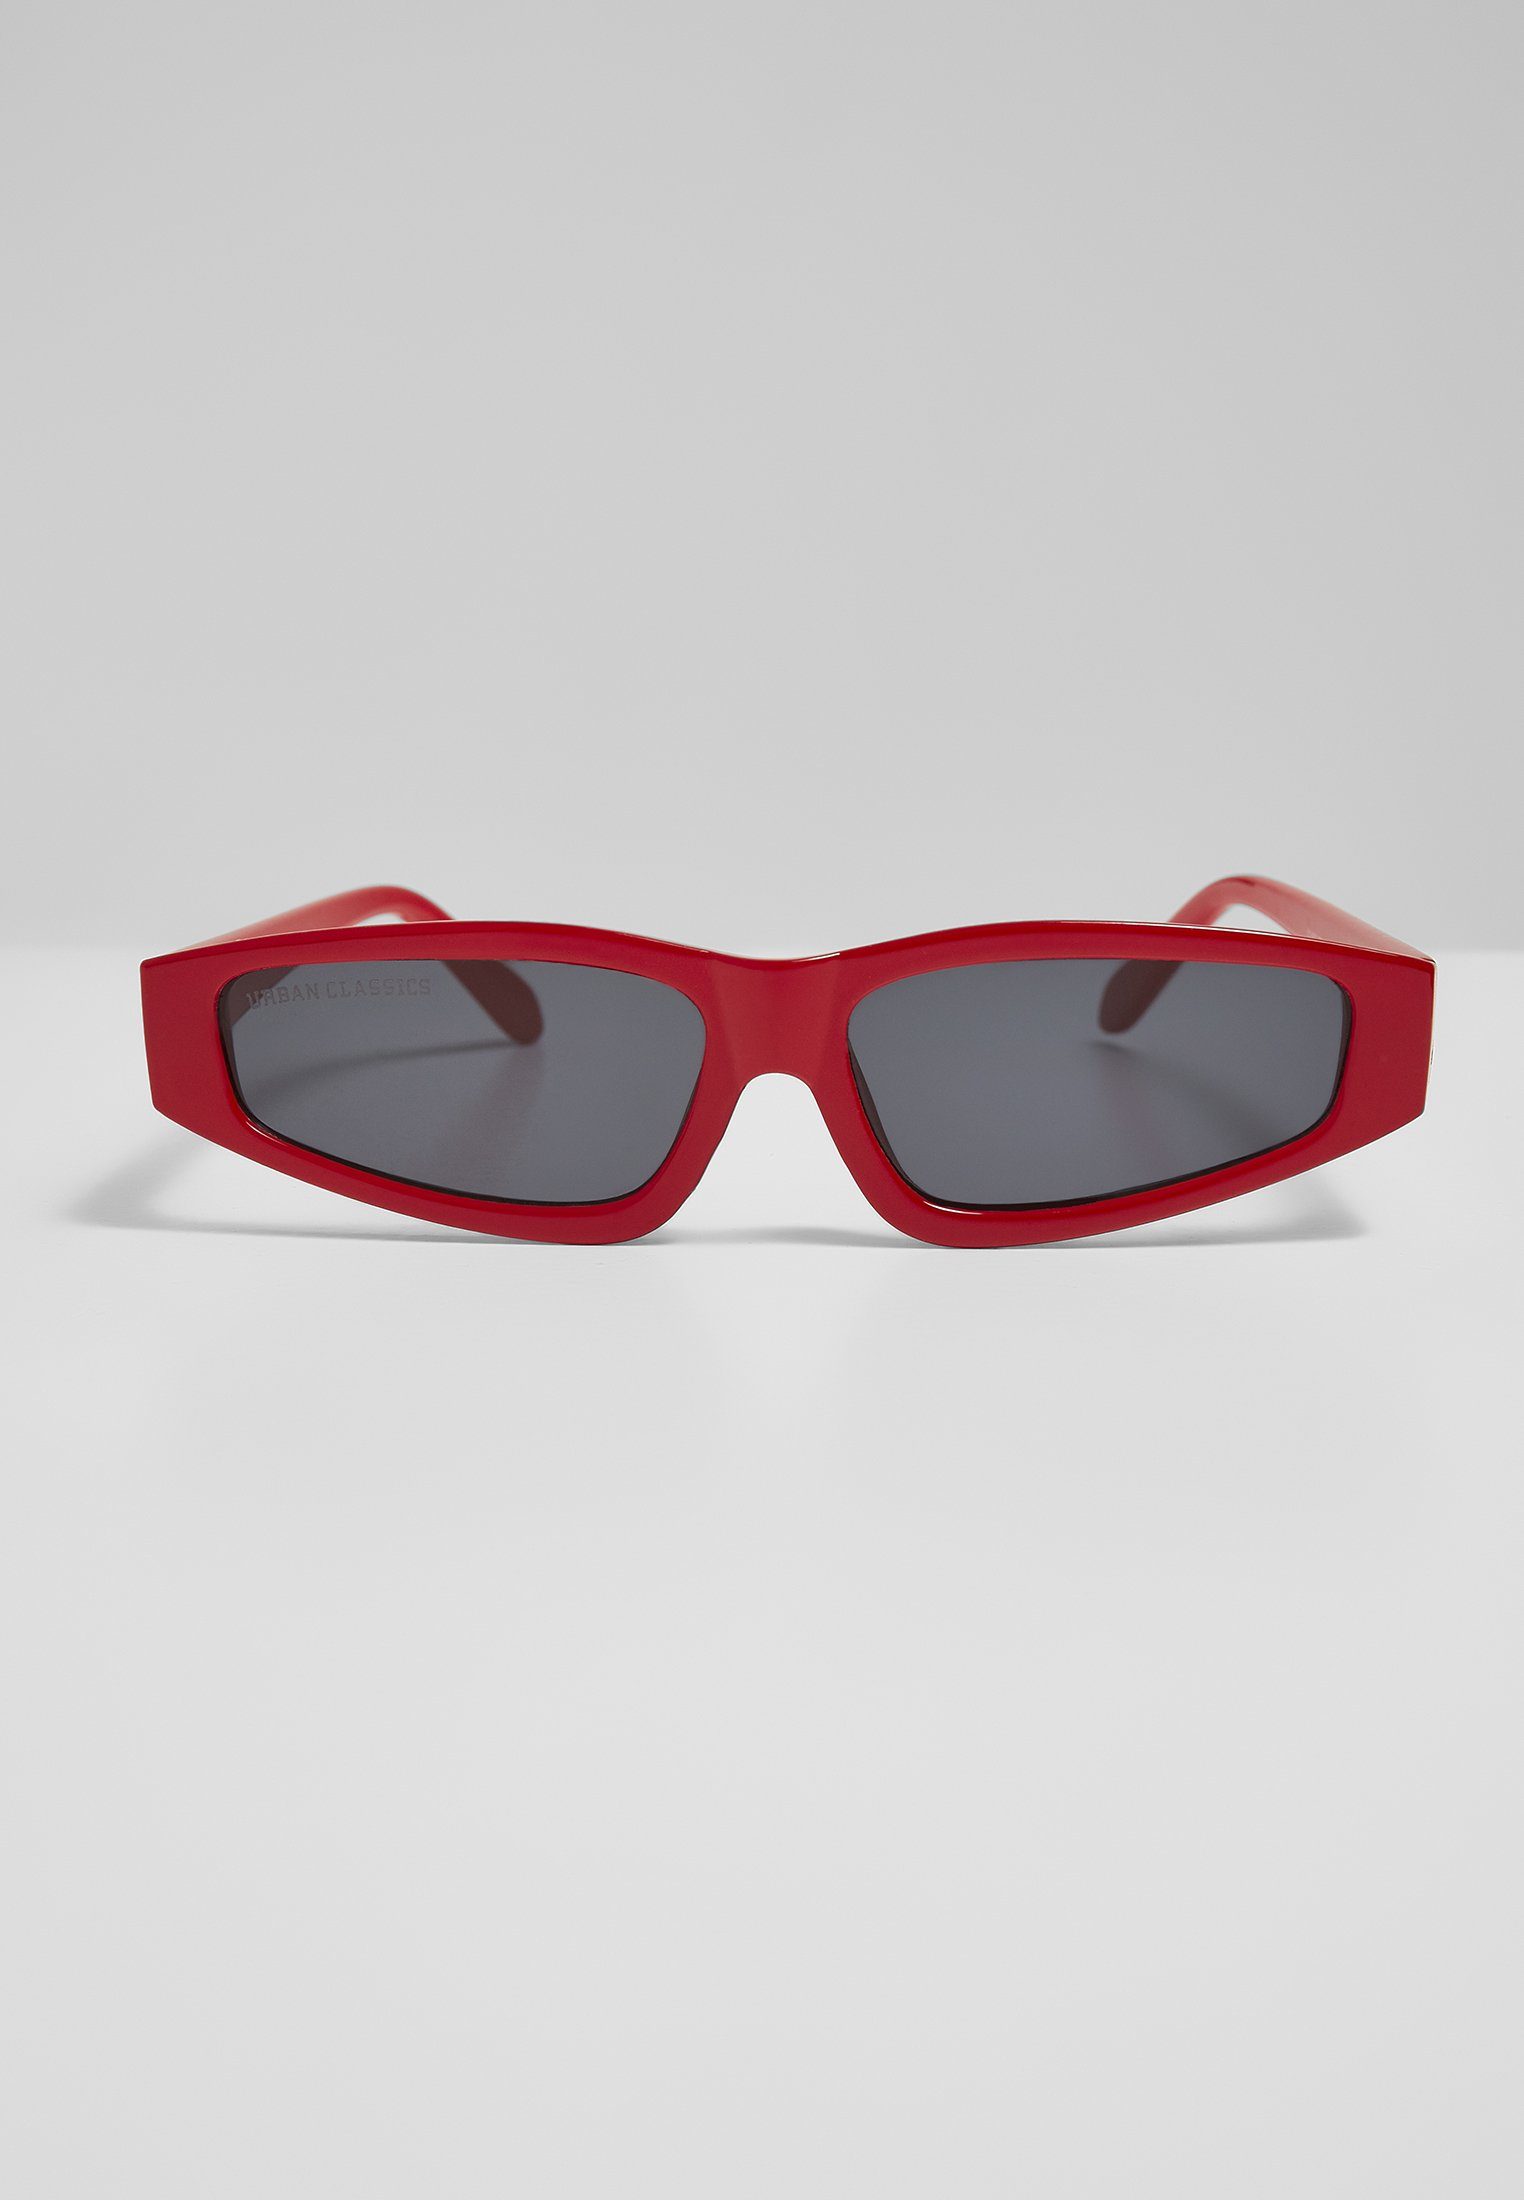 URBAN 2-Pack Lefkada black/black+red/black Unisex Sonnenbrille Sunglasses CLASSICS